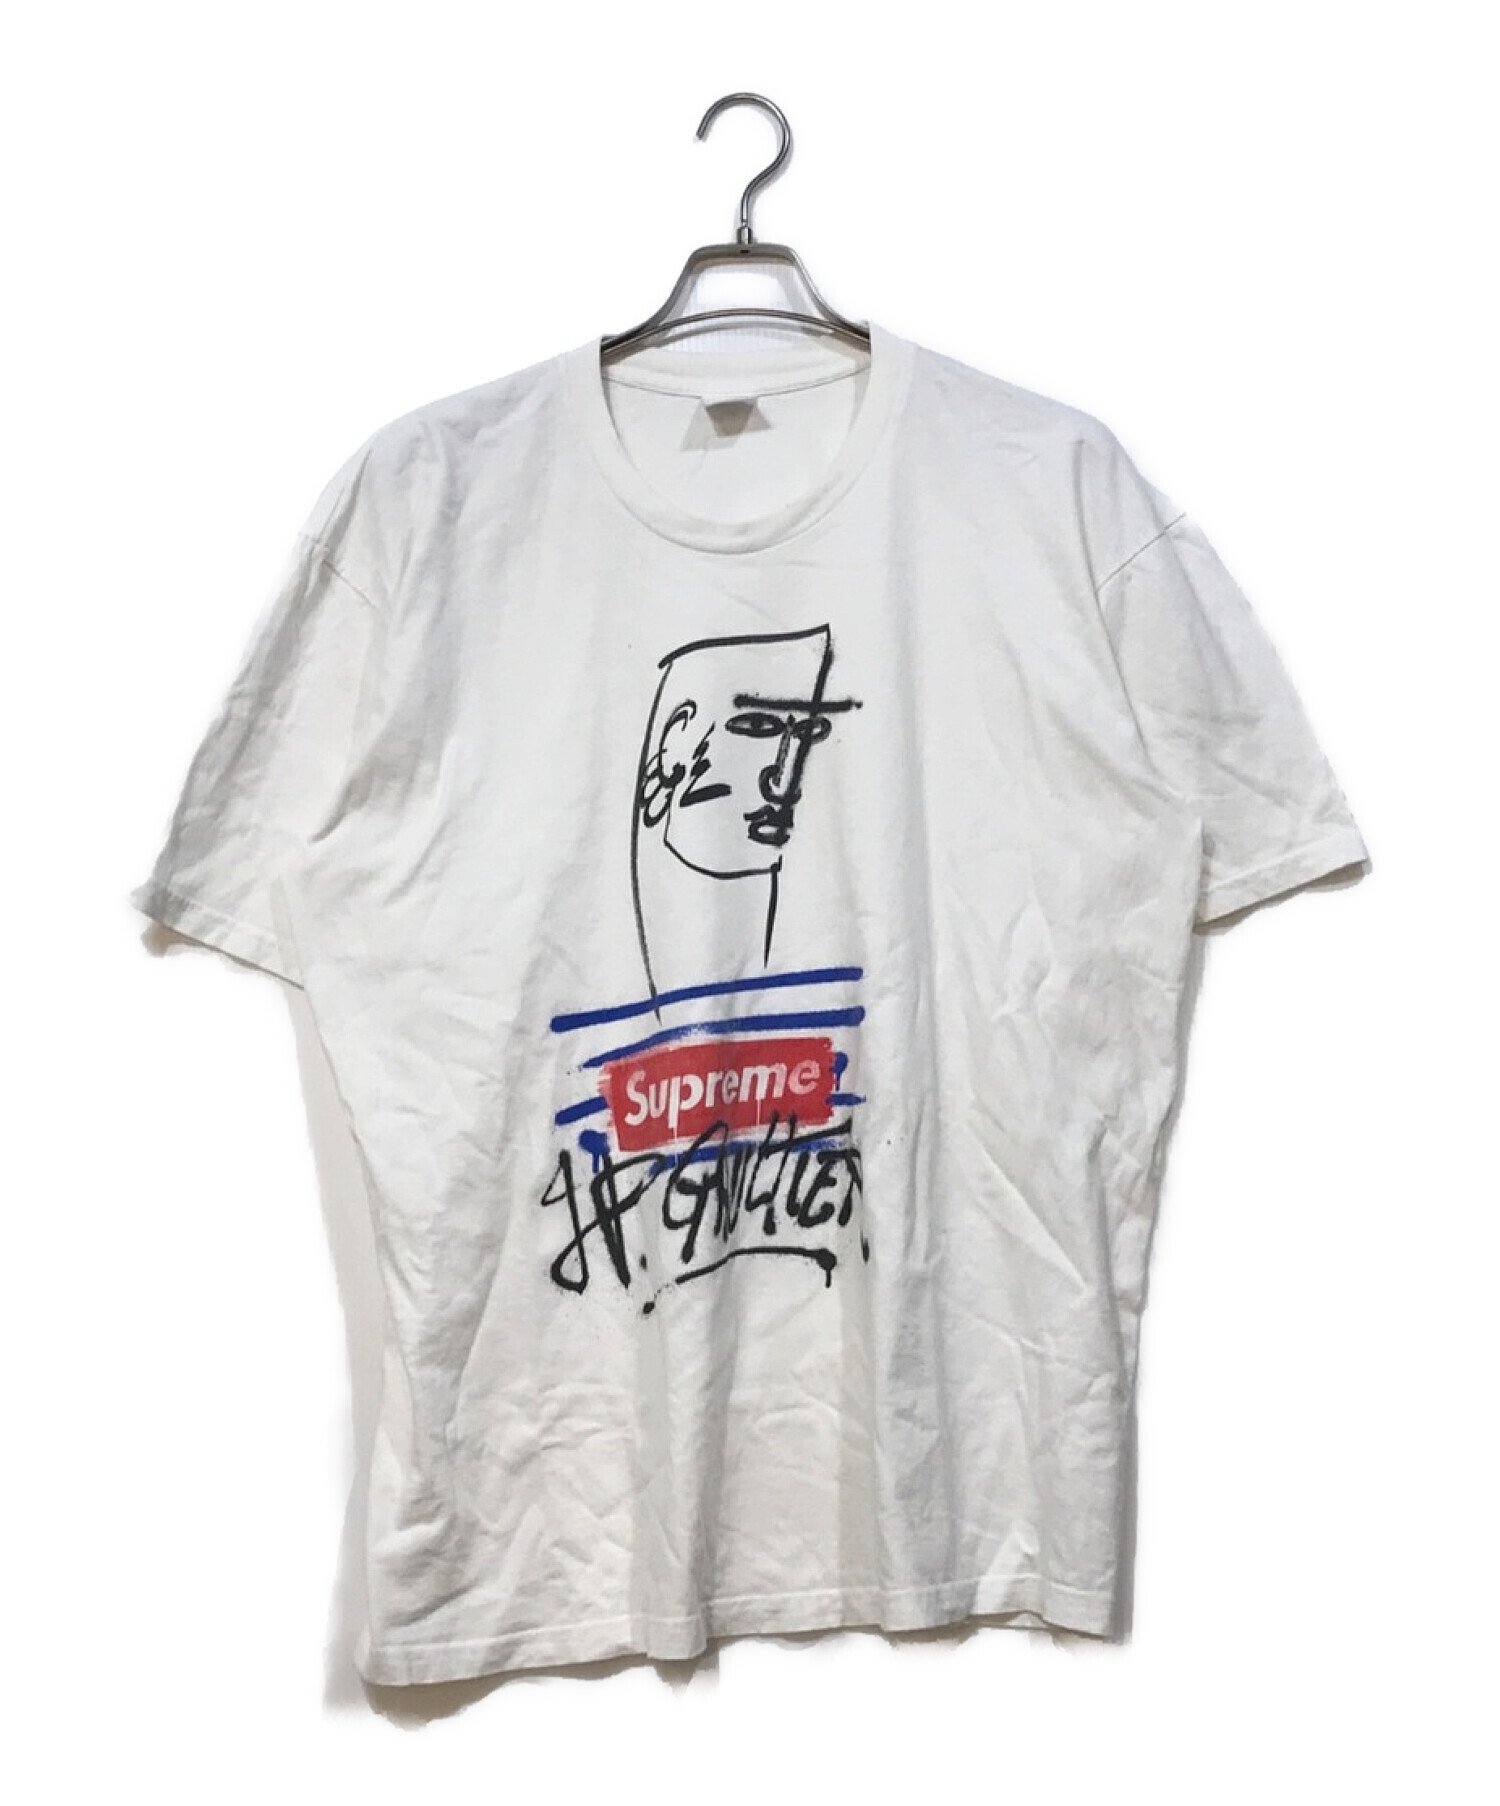 Supreme Jean paul gaultier t-shirts